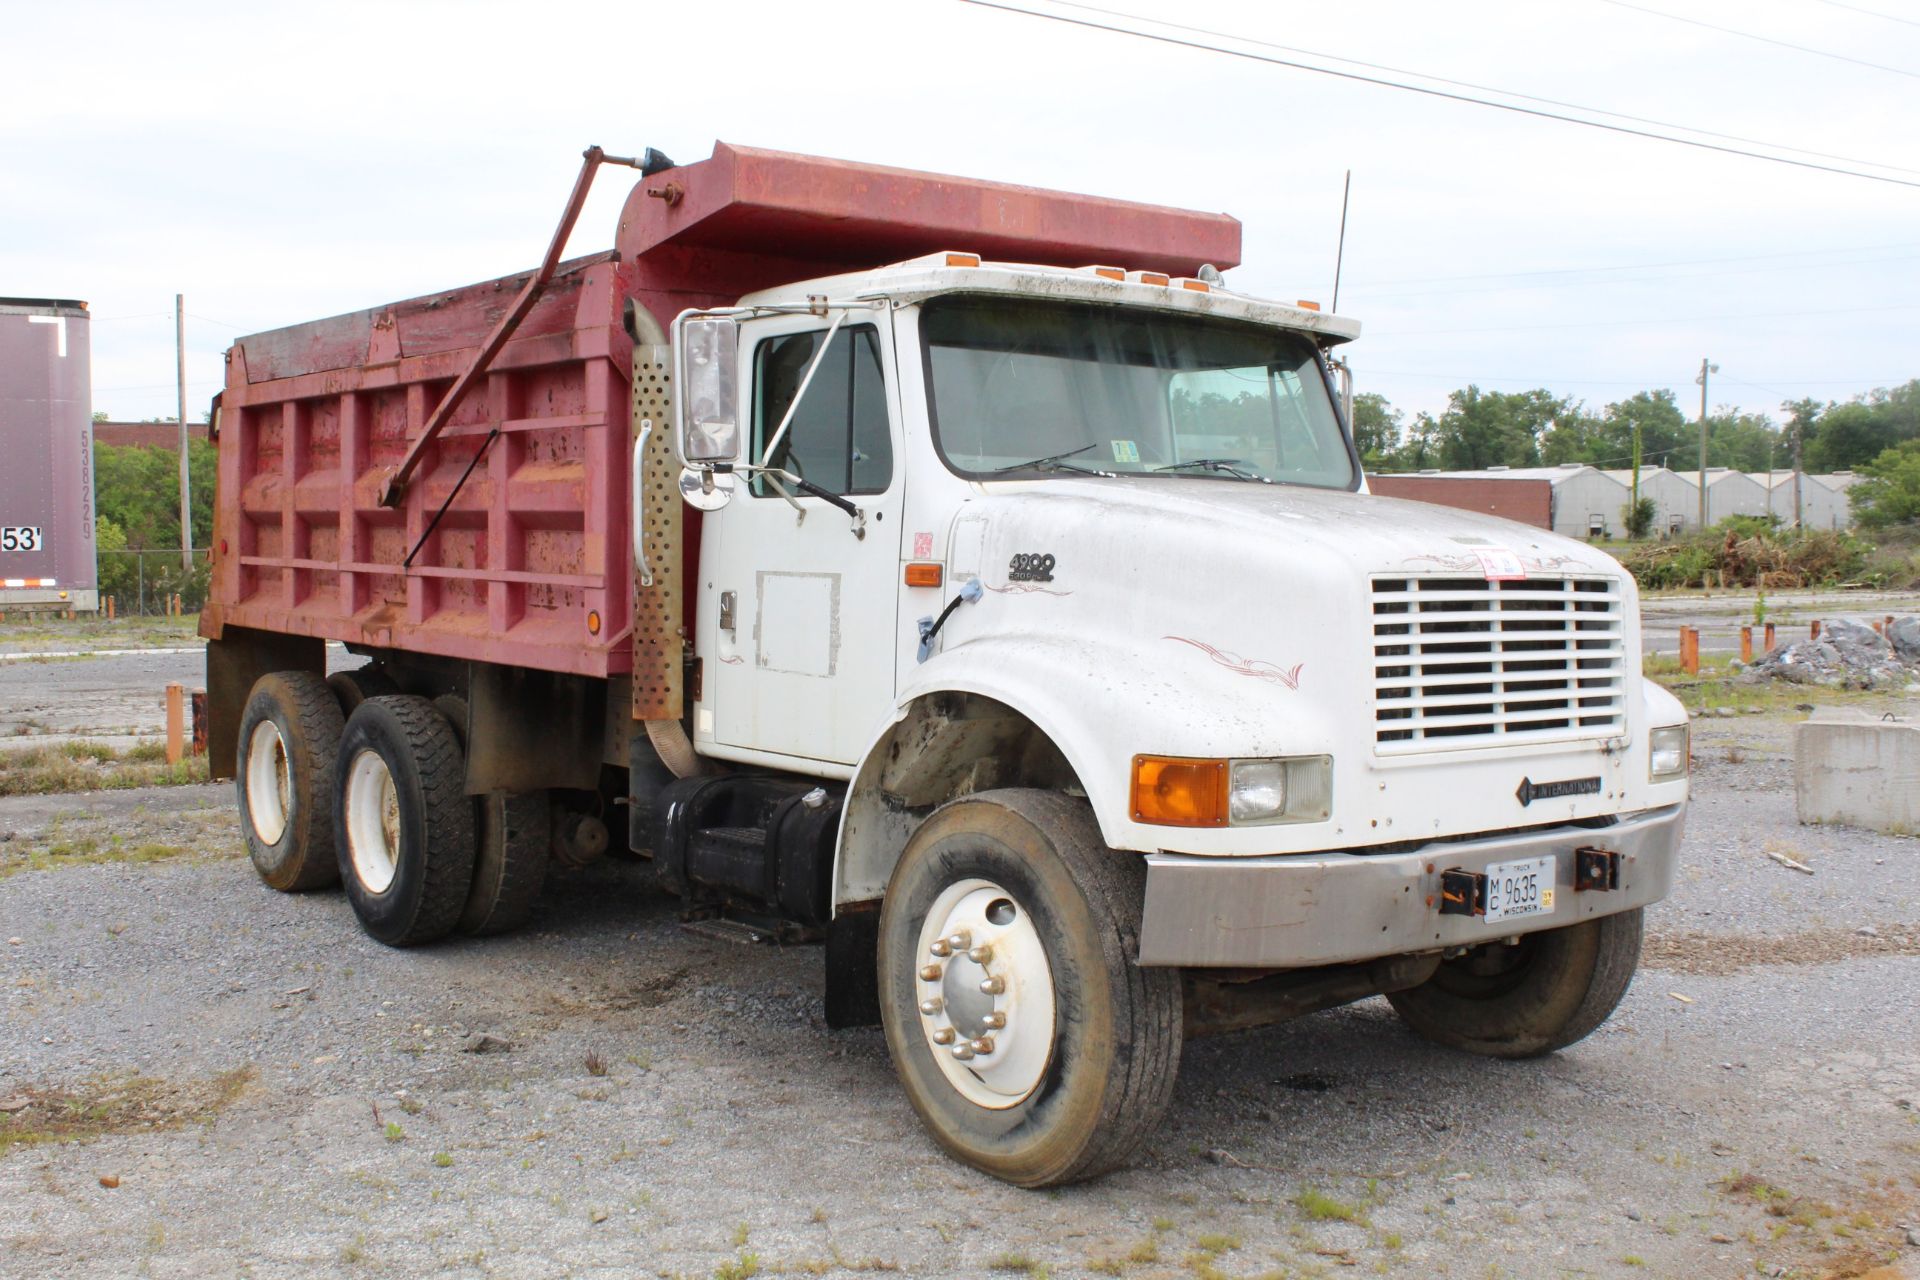 1999 International 4900 Tandem Axle Dump Truck, Detroit 530 Diesel, 10 Speed, 14' Fox Bodies Dump, - Image 2 of 5